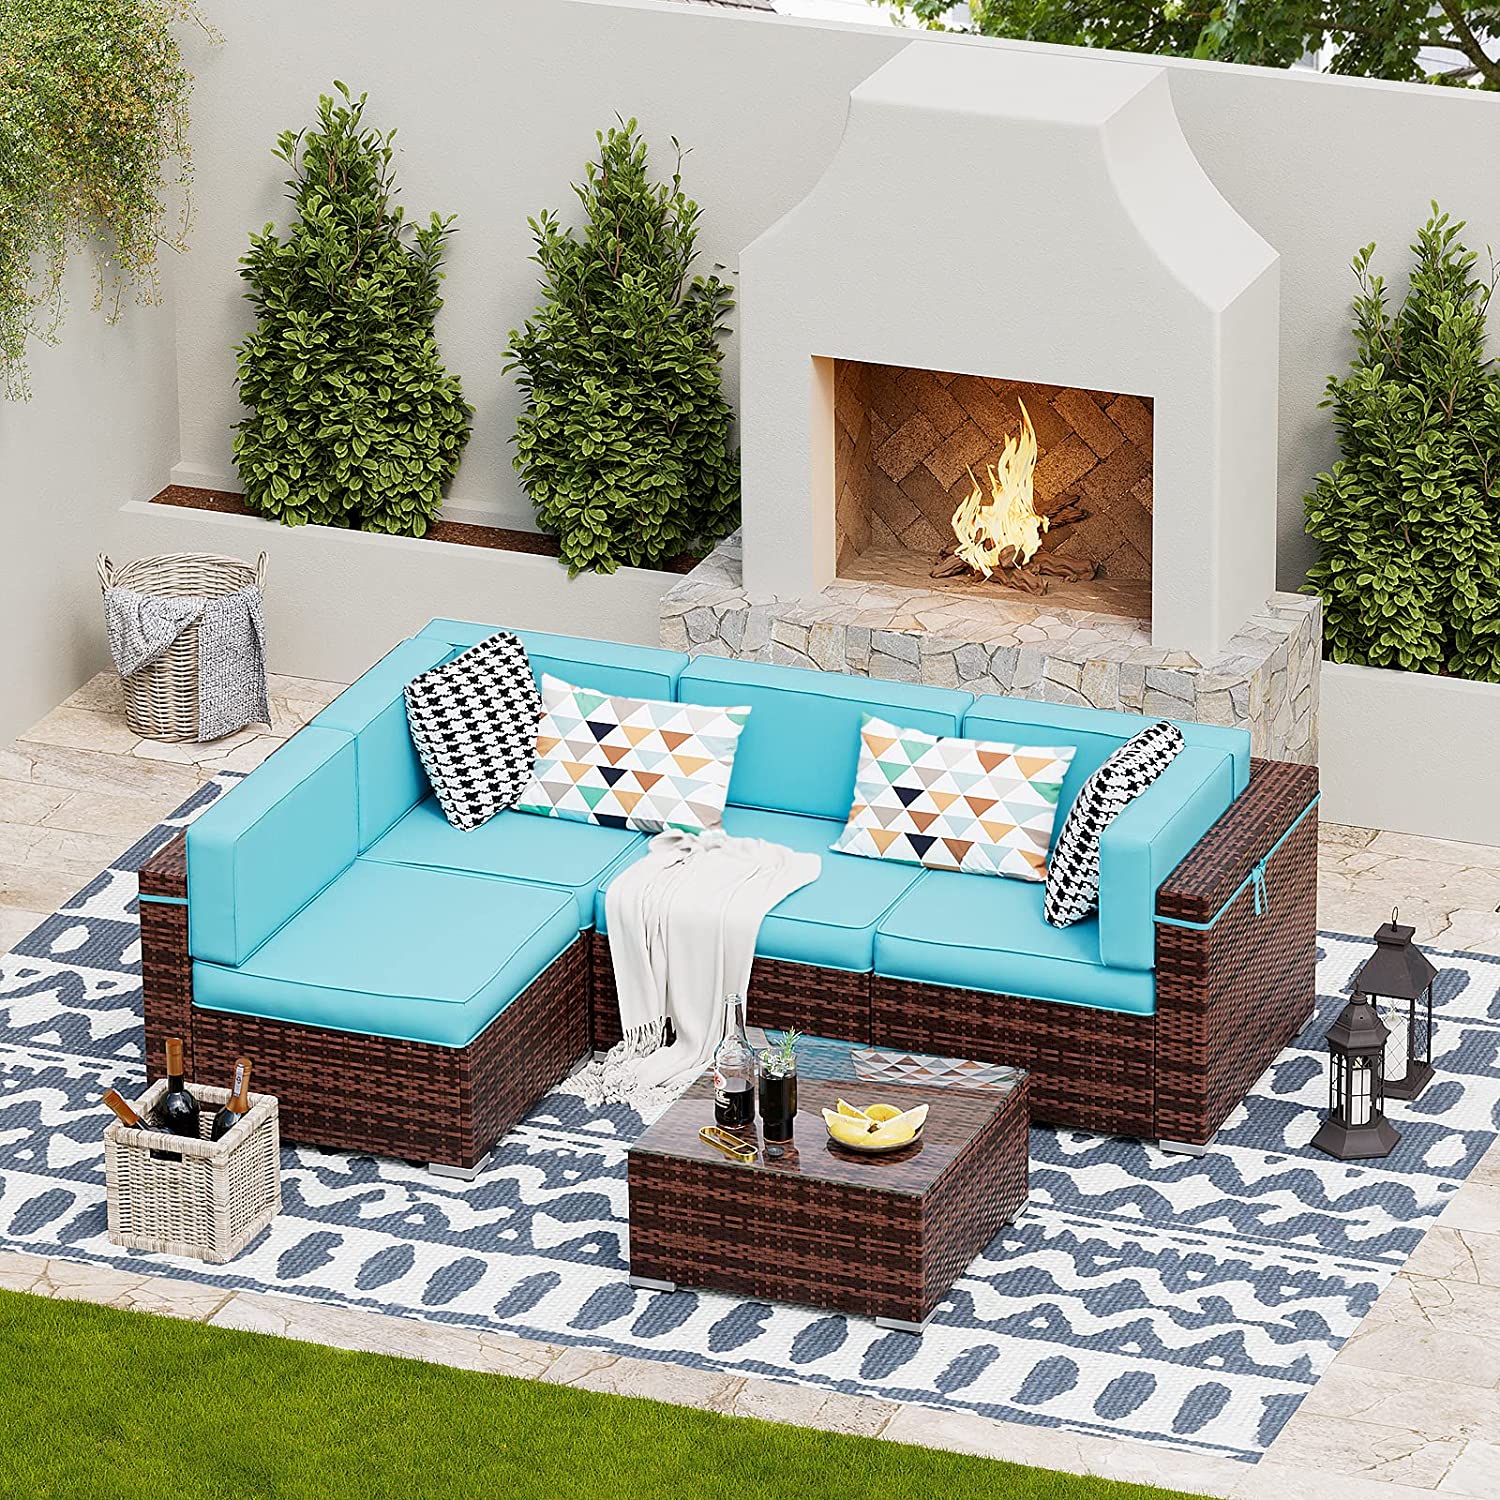 Rattan Wicker Outdoor Patio Furniture Set with Waterproof Cover